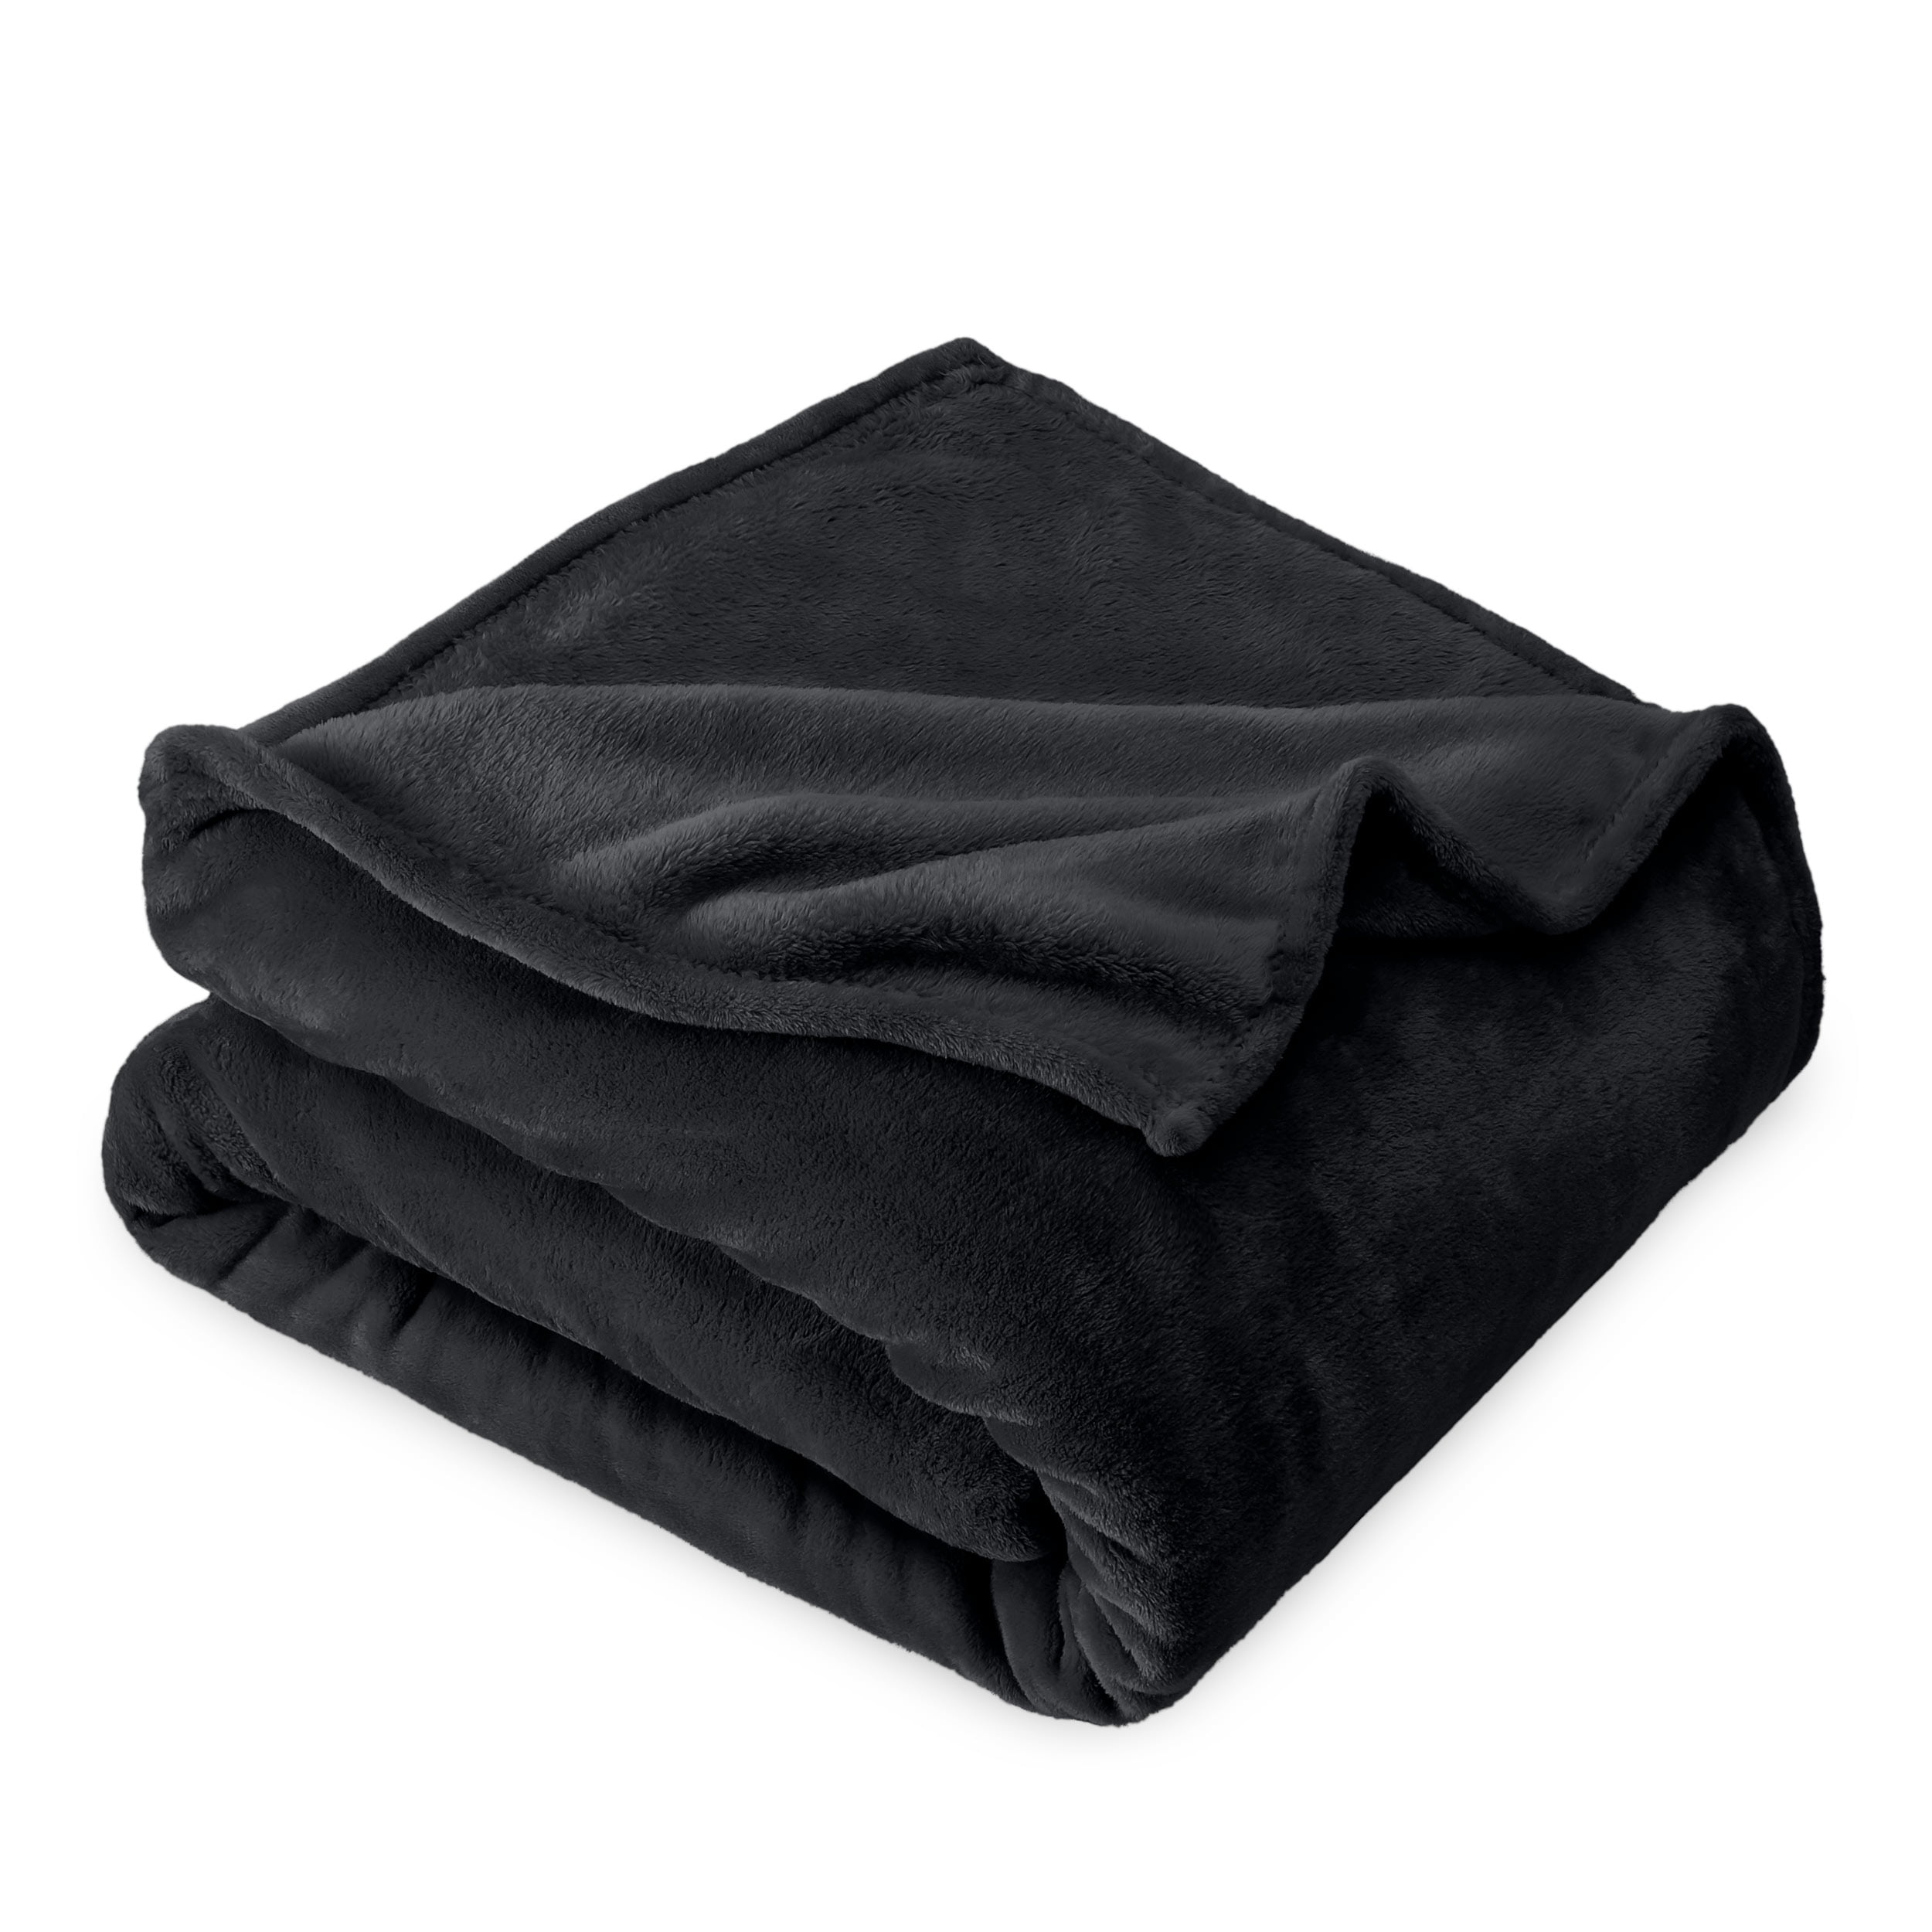 Bare Home Microplush Fleece Blanket - 300 GSM - Fuzzy Microfleece - Soft &  Plush - Full/Queen, Black